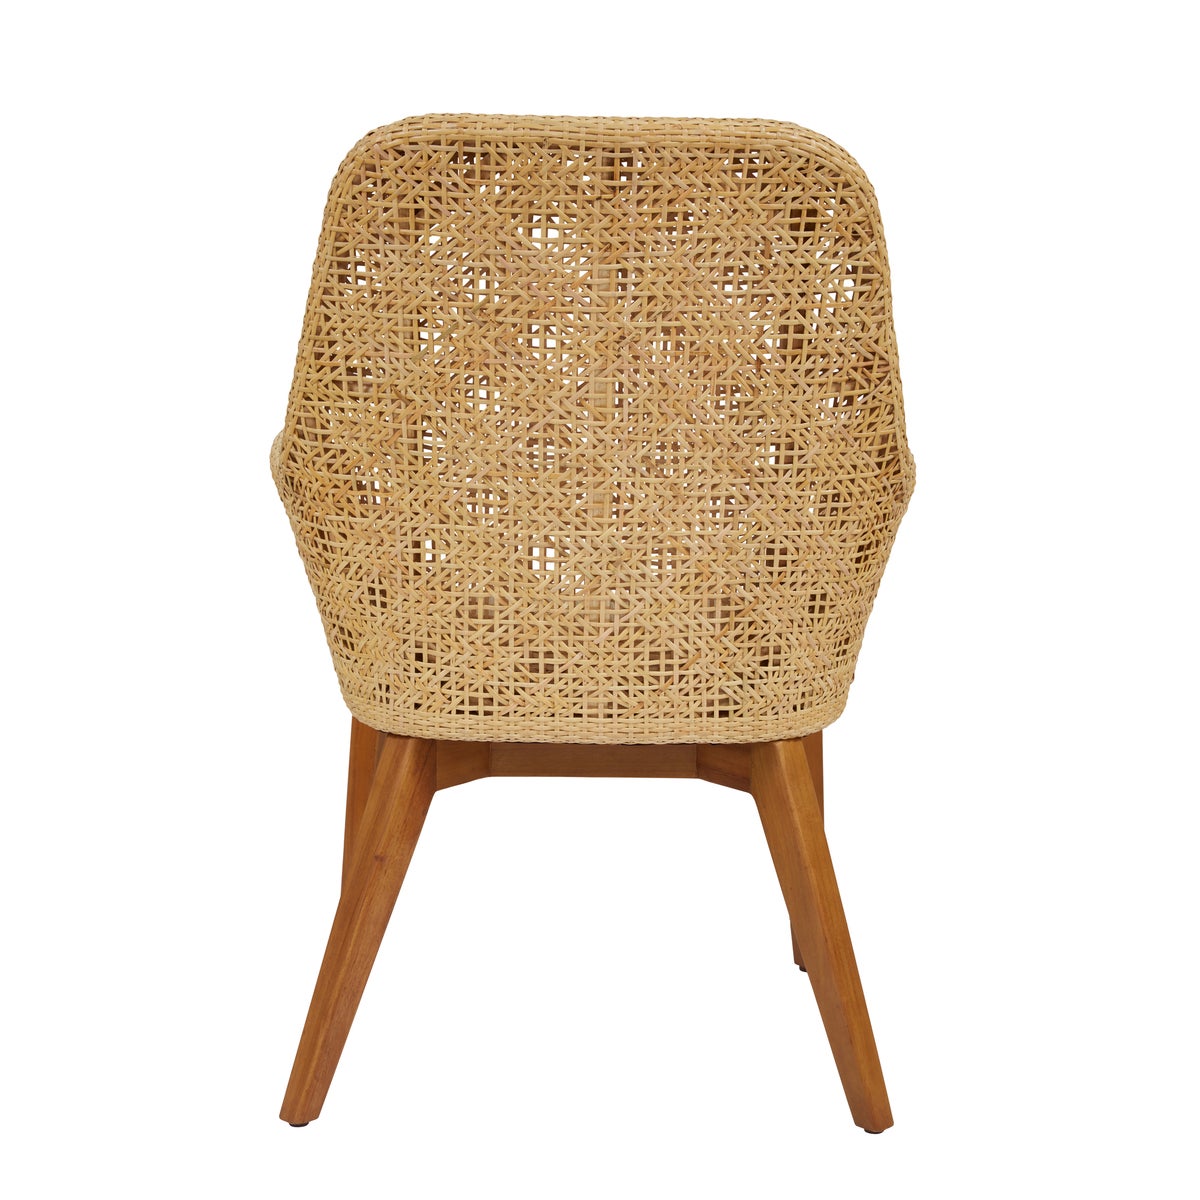 Ava Arm Chair Color - Natural Cushion Color - Cream